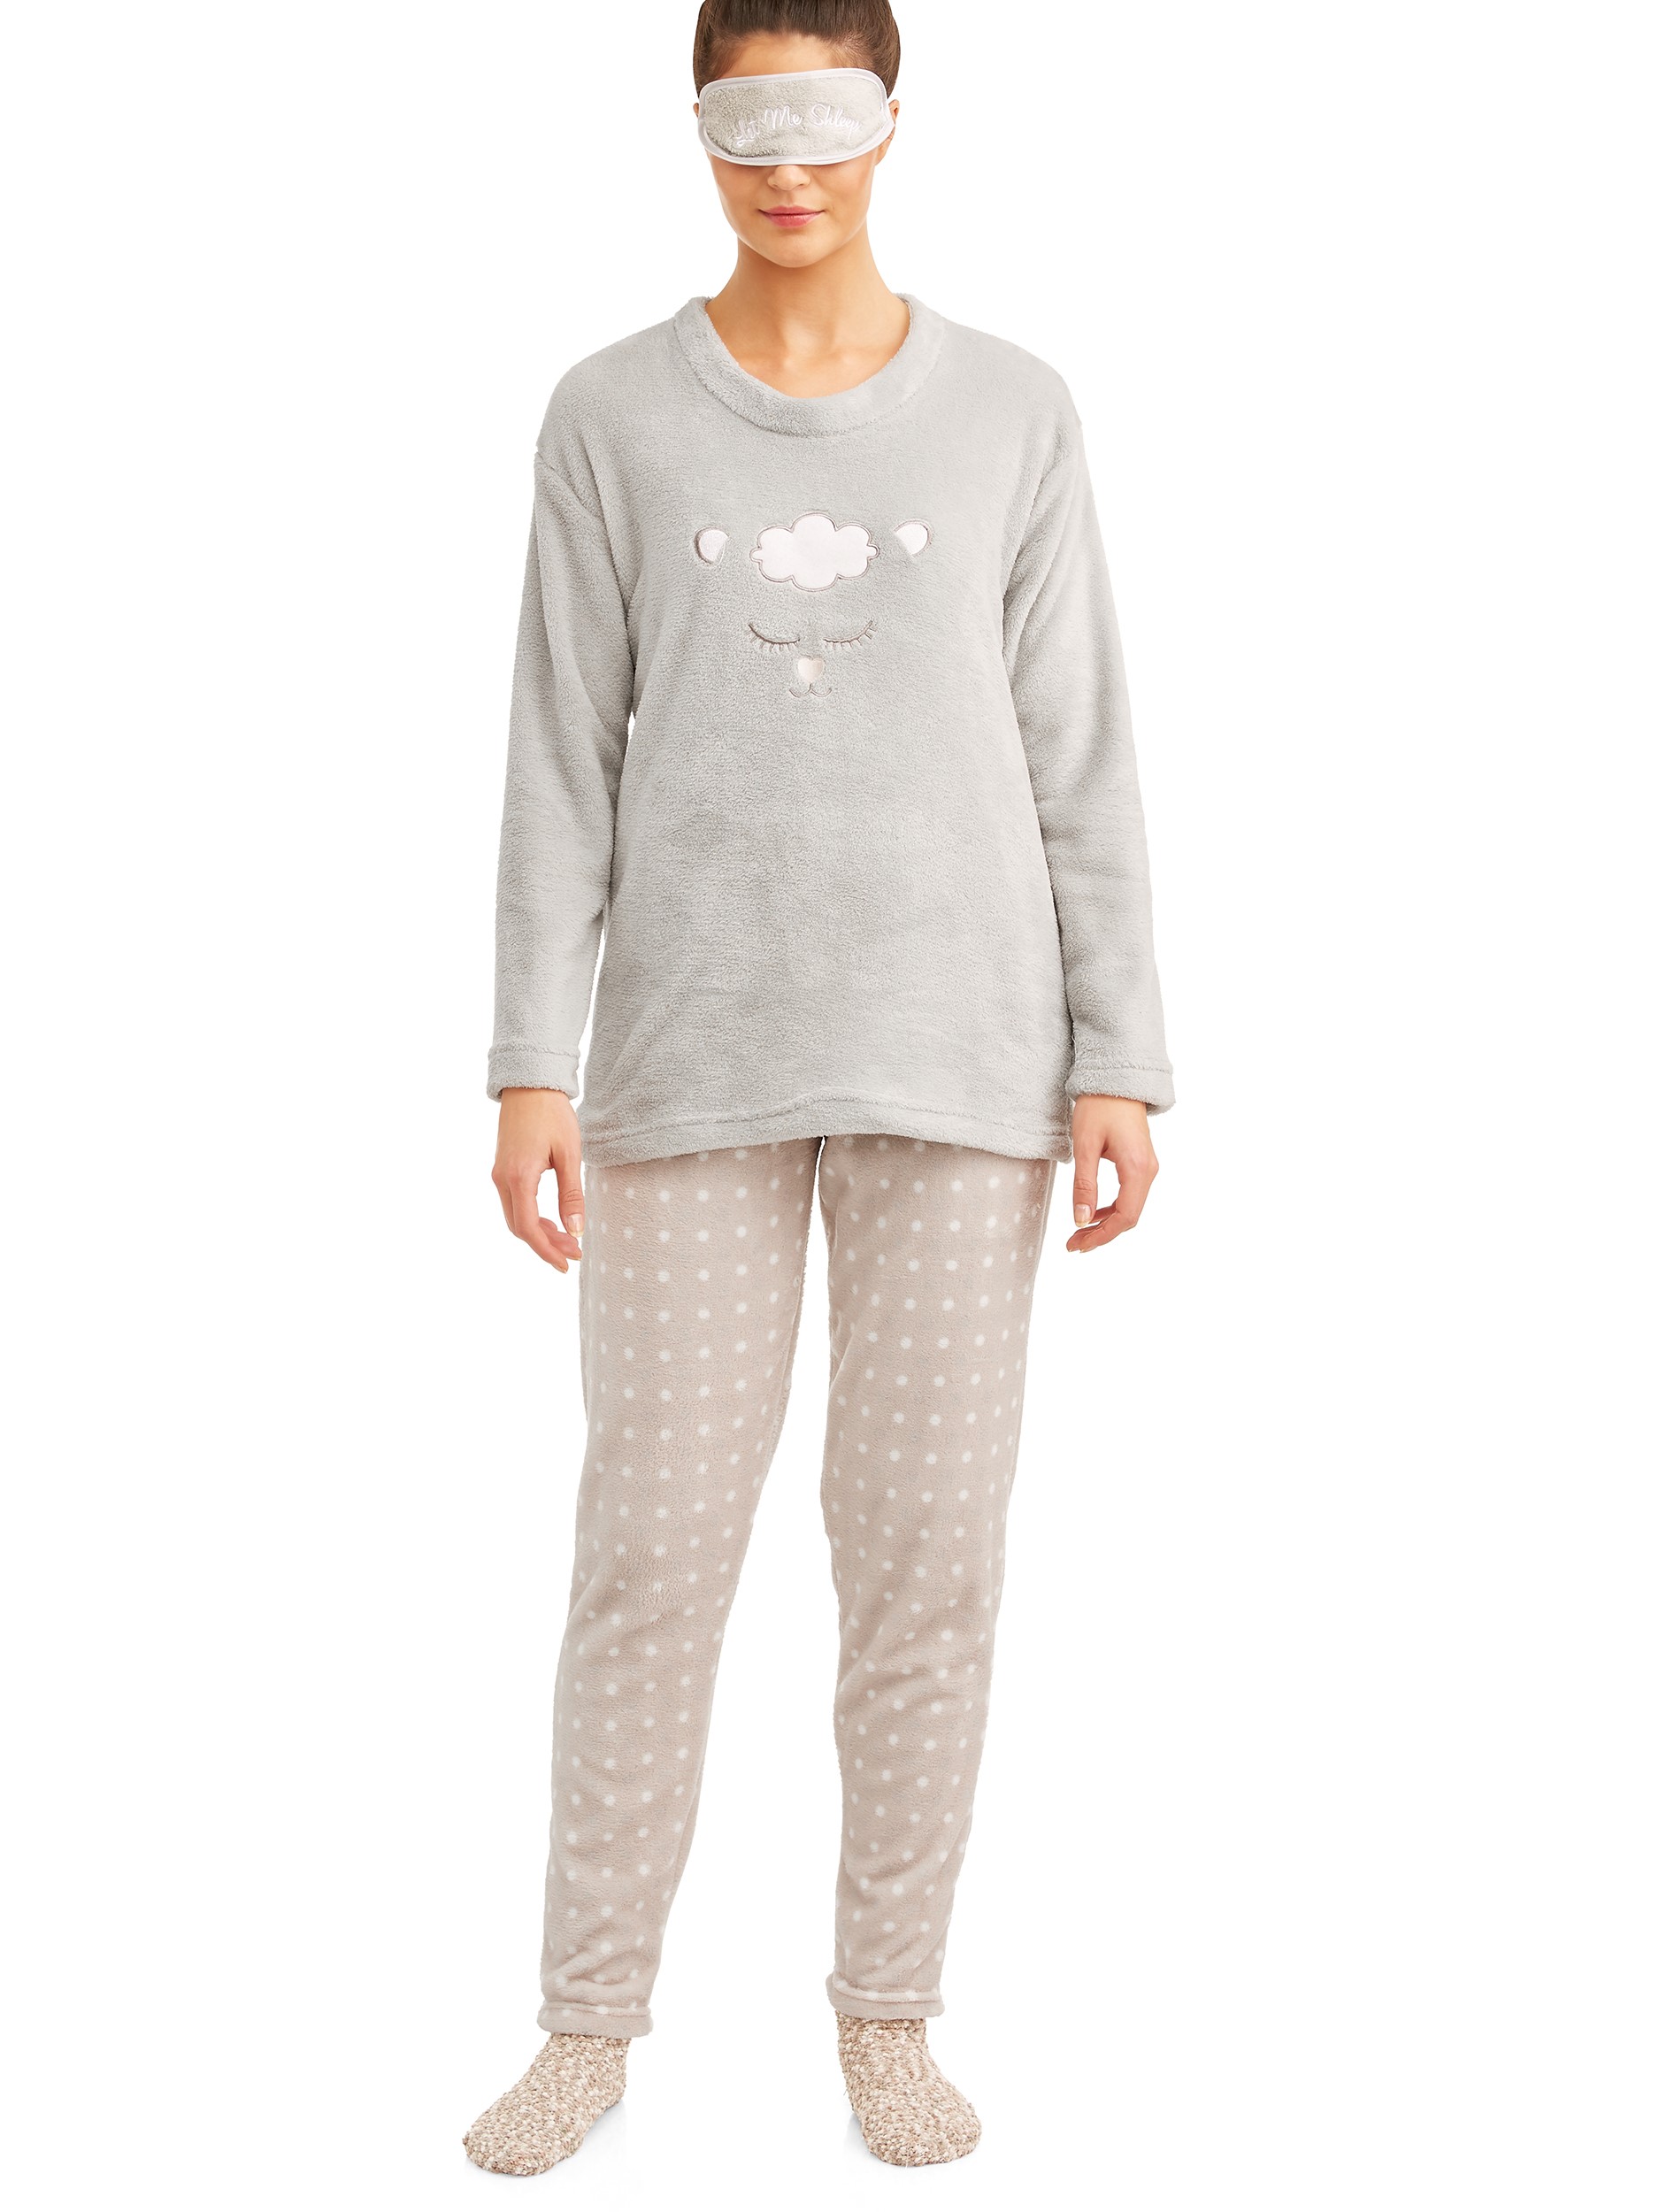 Sweet Dreams Women's 4-Piece Plush Gift Box Pajama Set (Top, Pant, Socks, and Eye Mask) - image 3 of 5